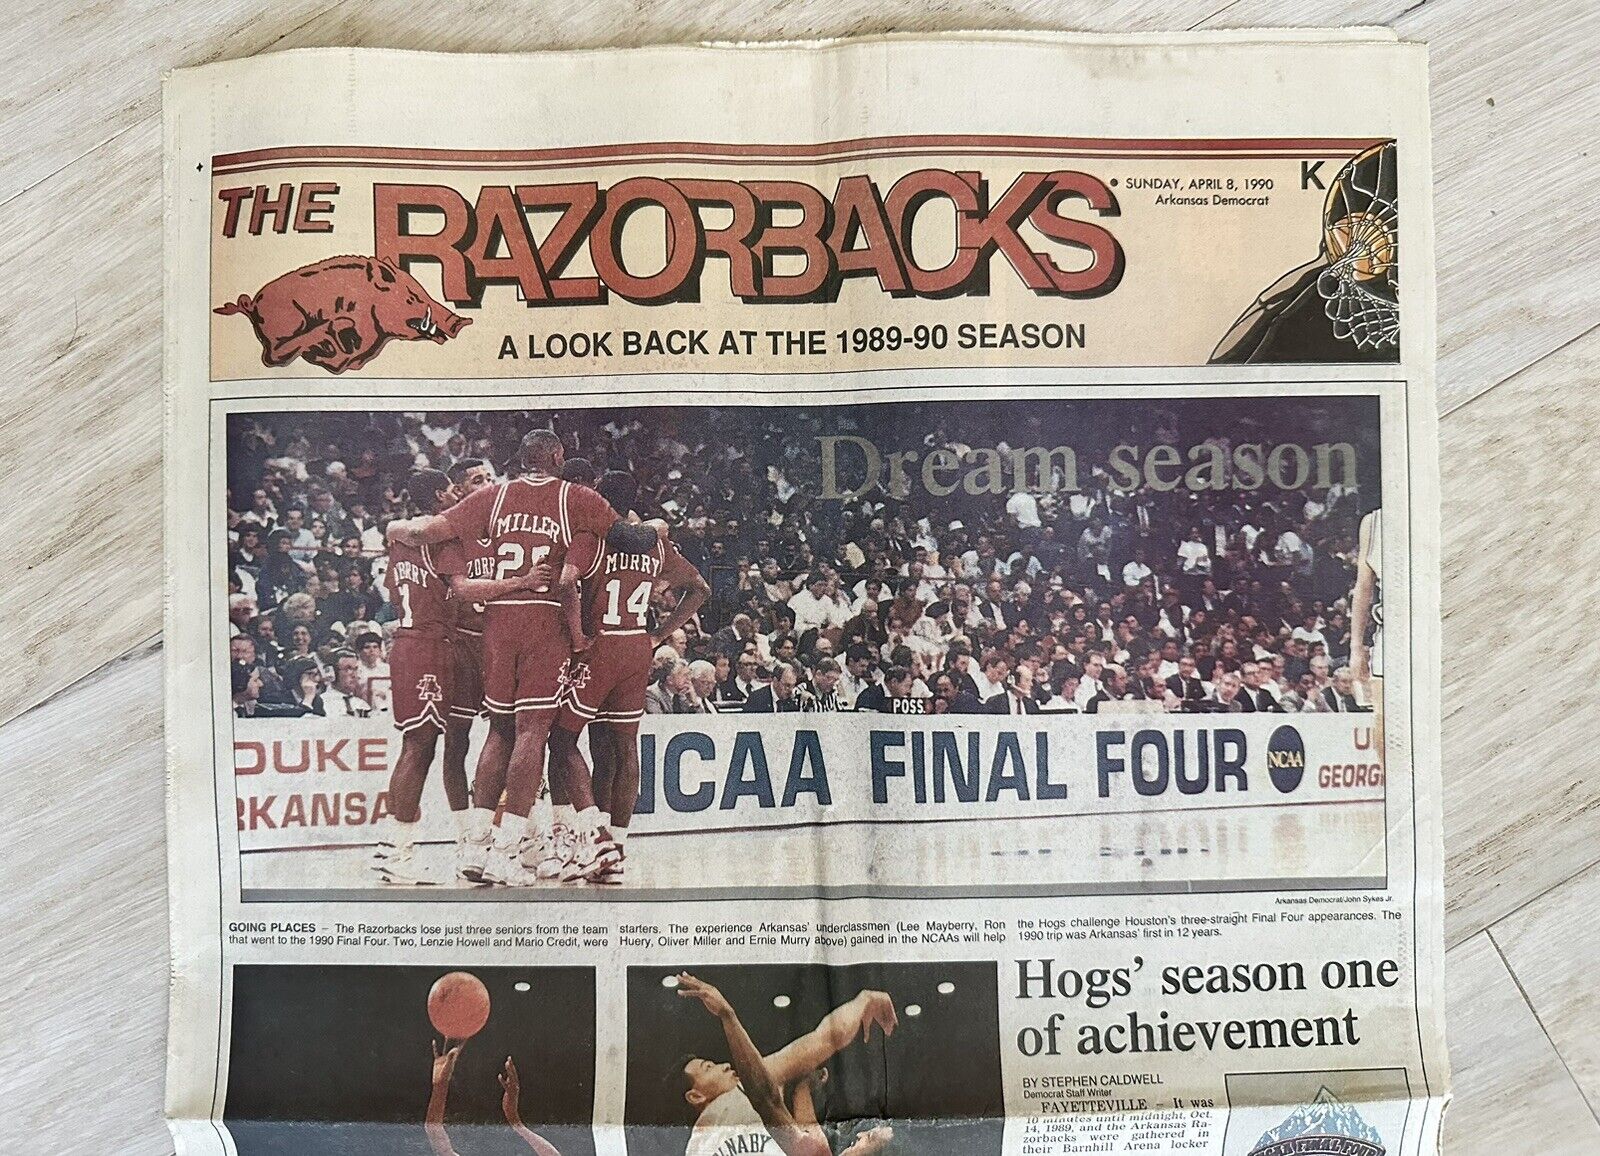 Arkansas Razorbacks Basketball SWC 1989-1990 Season Newspaper Insert 4/8/1990